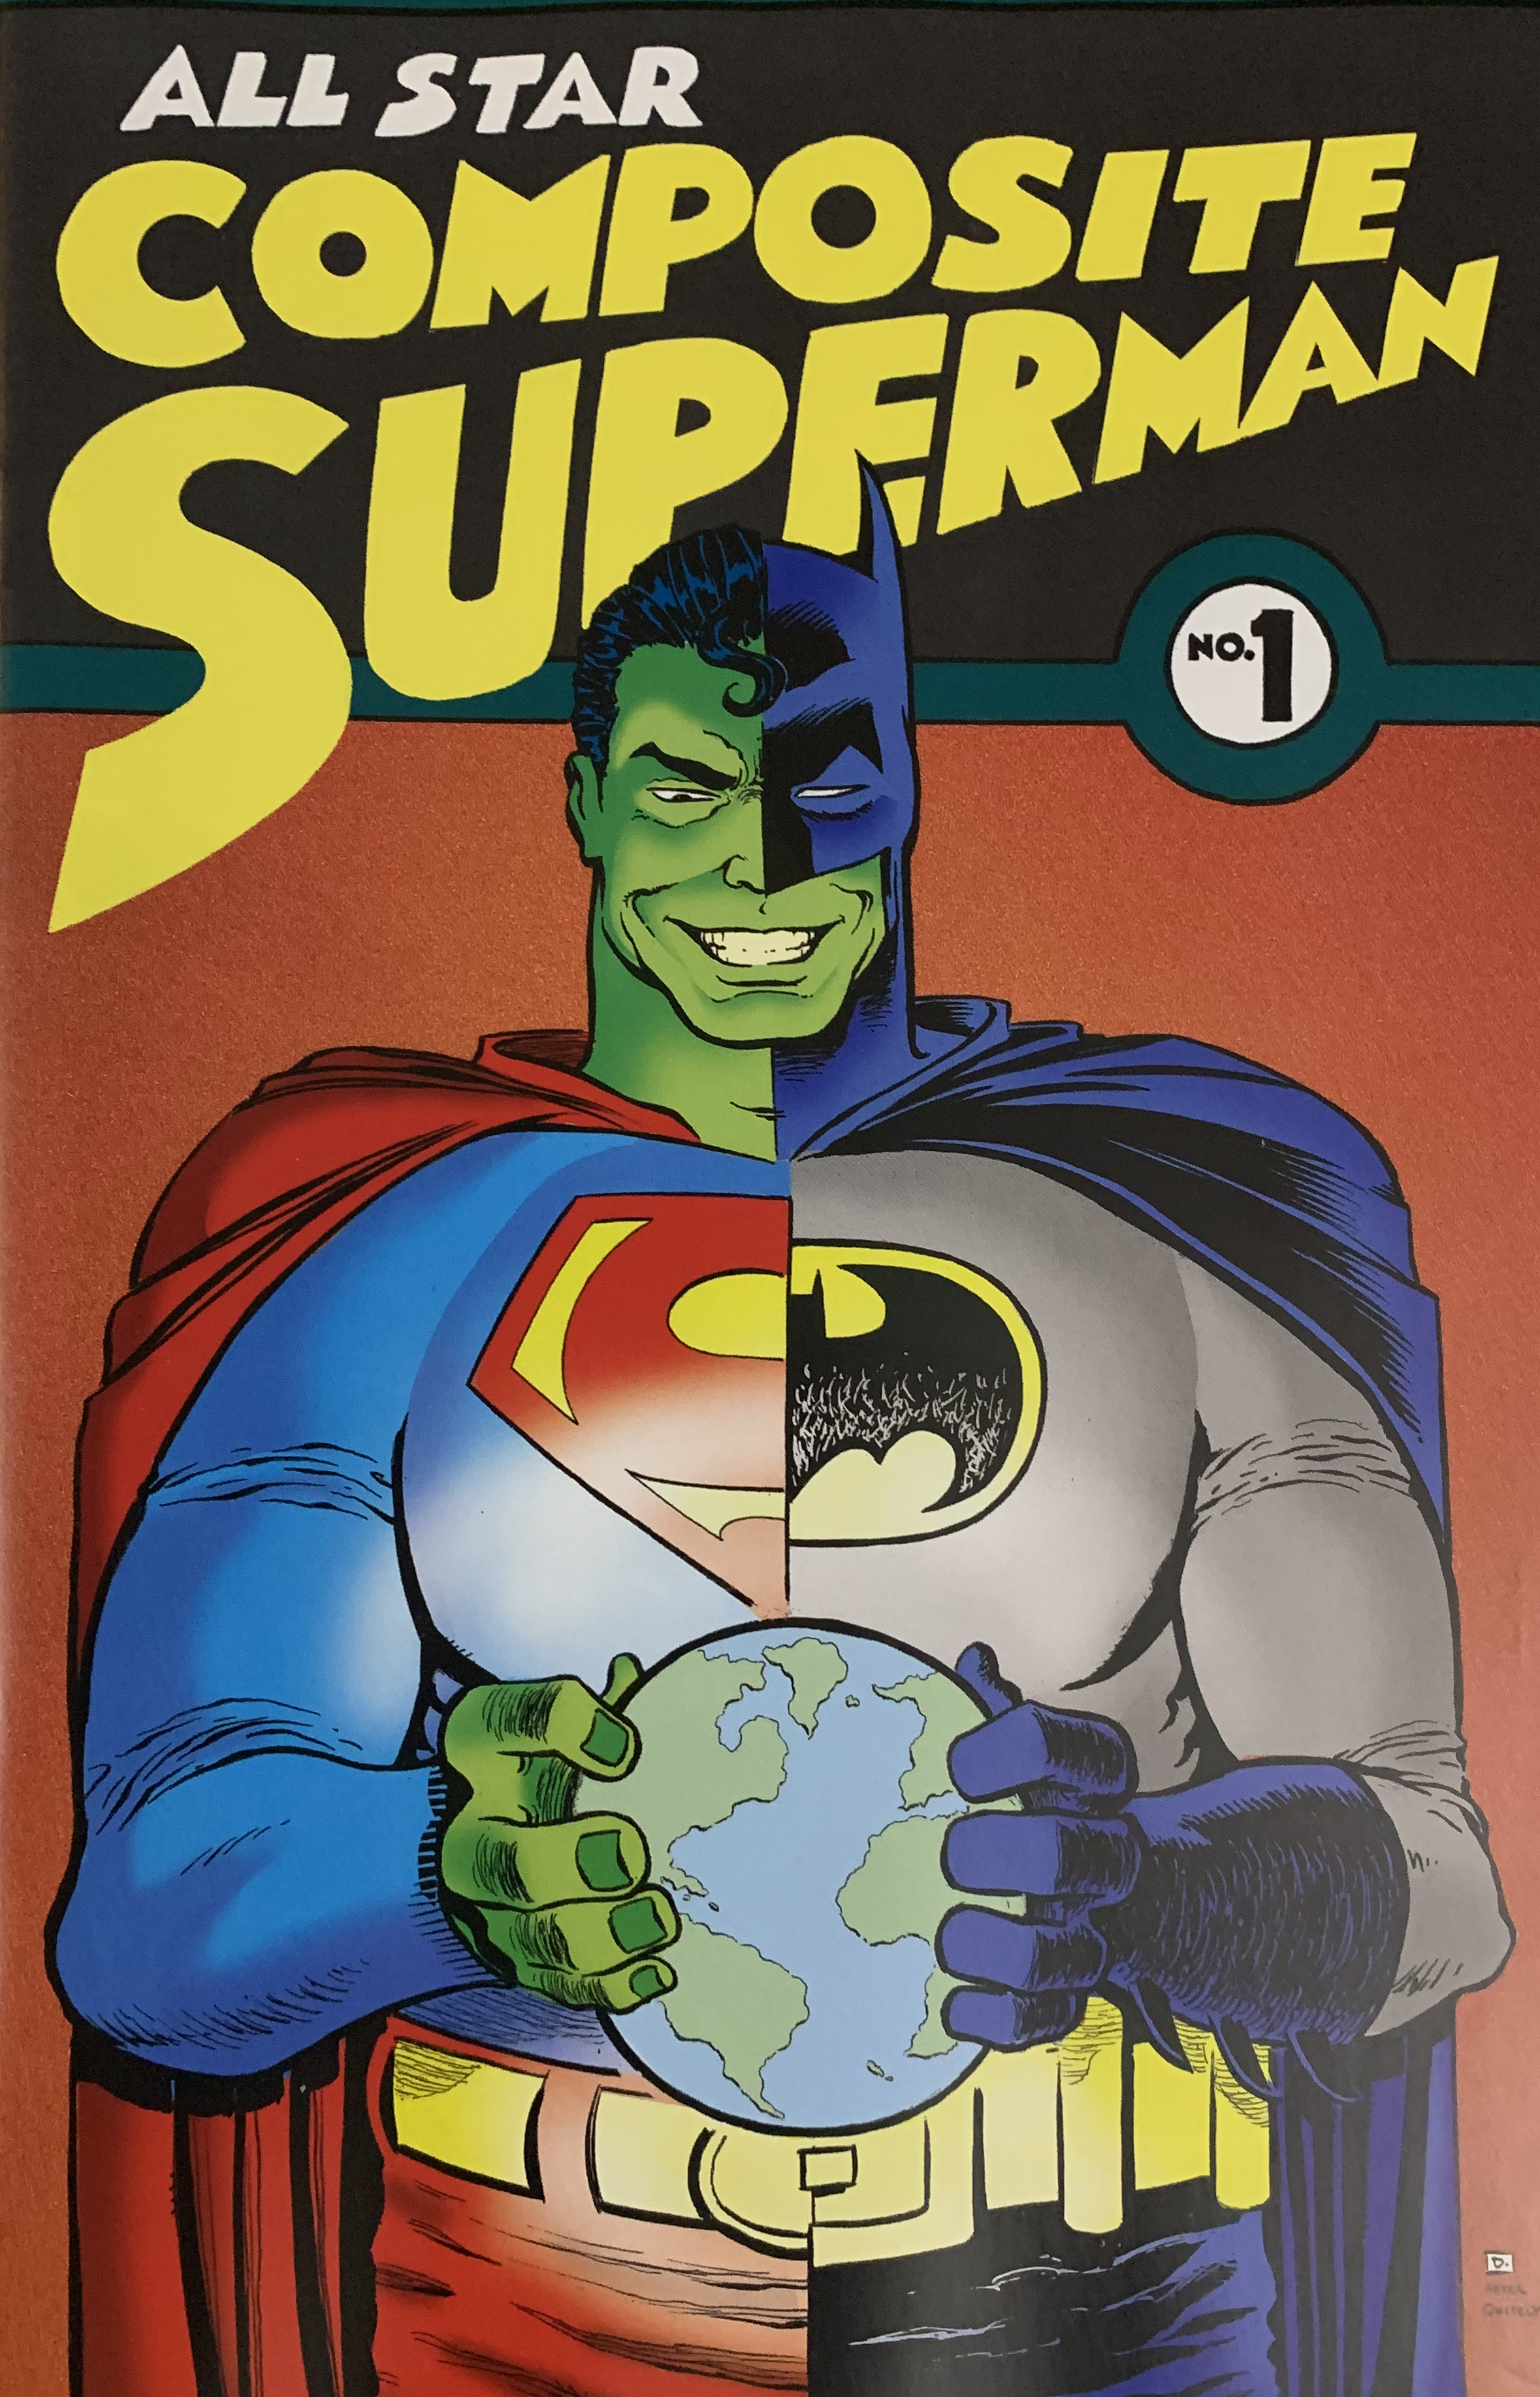 Dave Howlett's cover for All Star Composite Superman #1